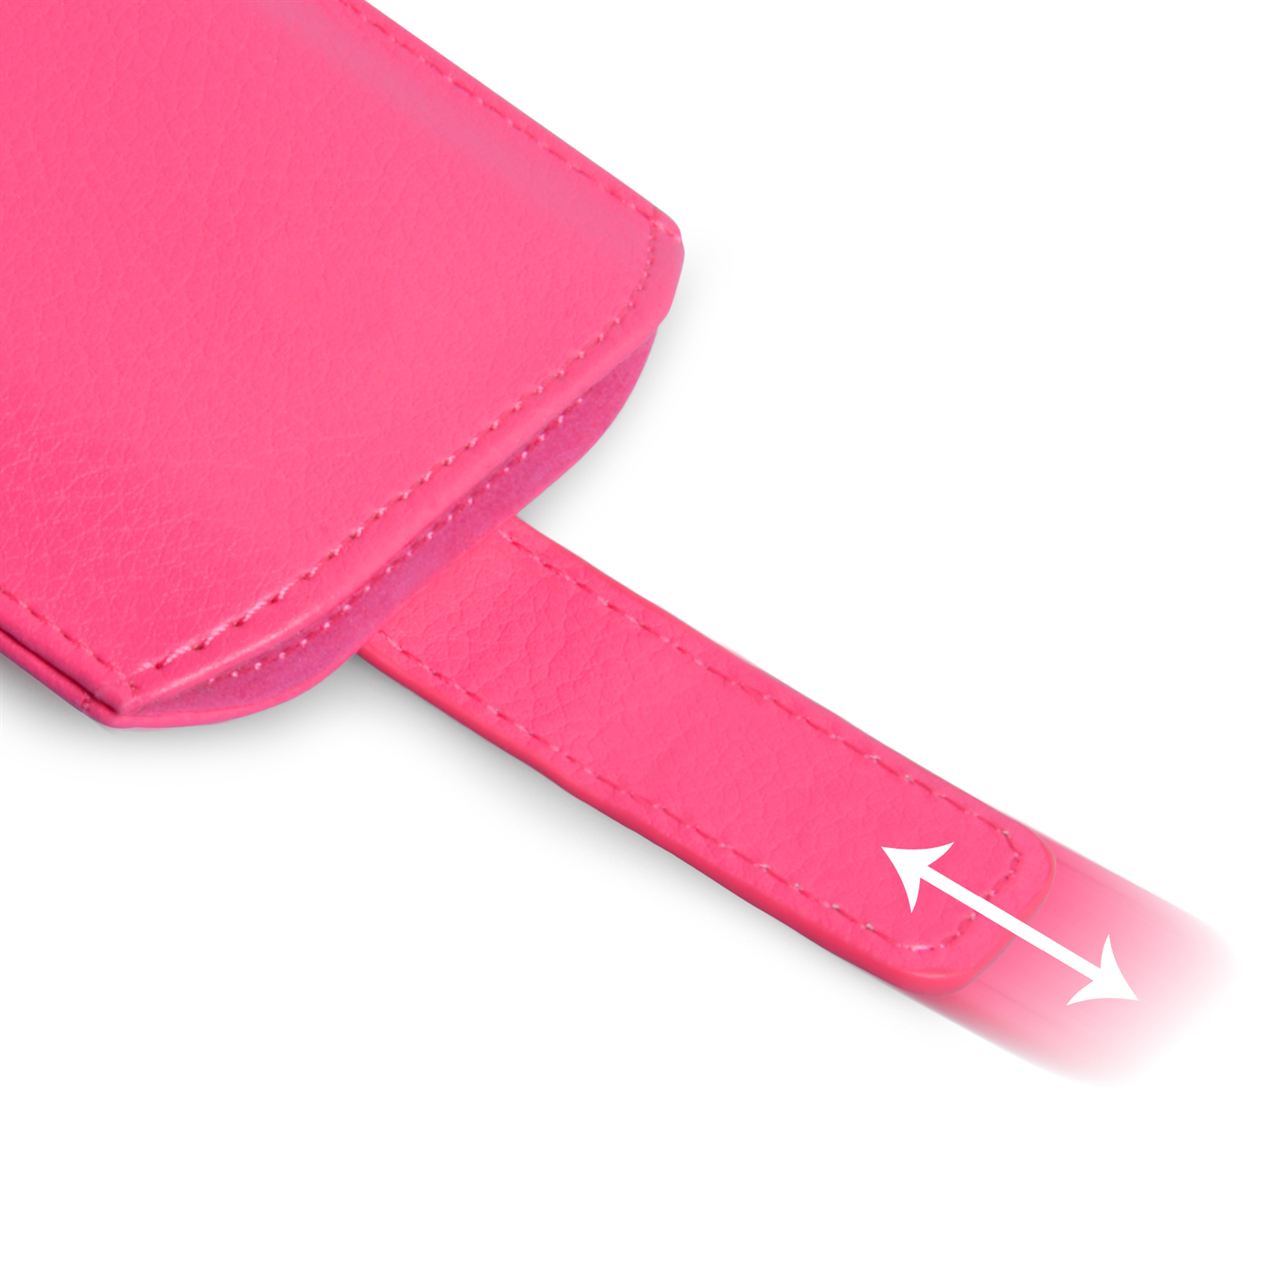 Caseflex Medium Textured Faux Leather Return Phone Pouch - Pink